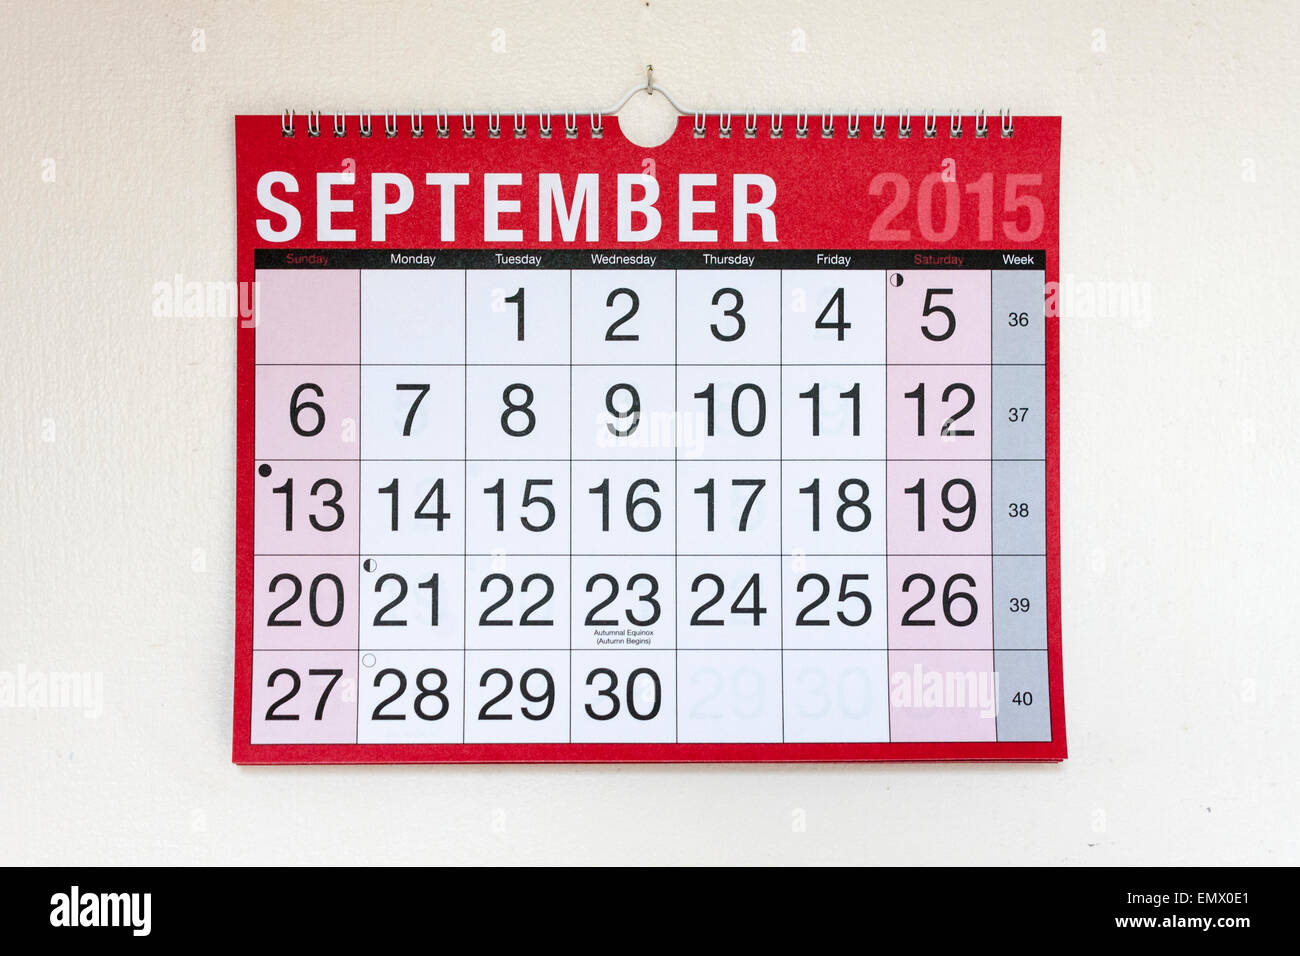 Wall calendar for month of September 2015 Stock Photo